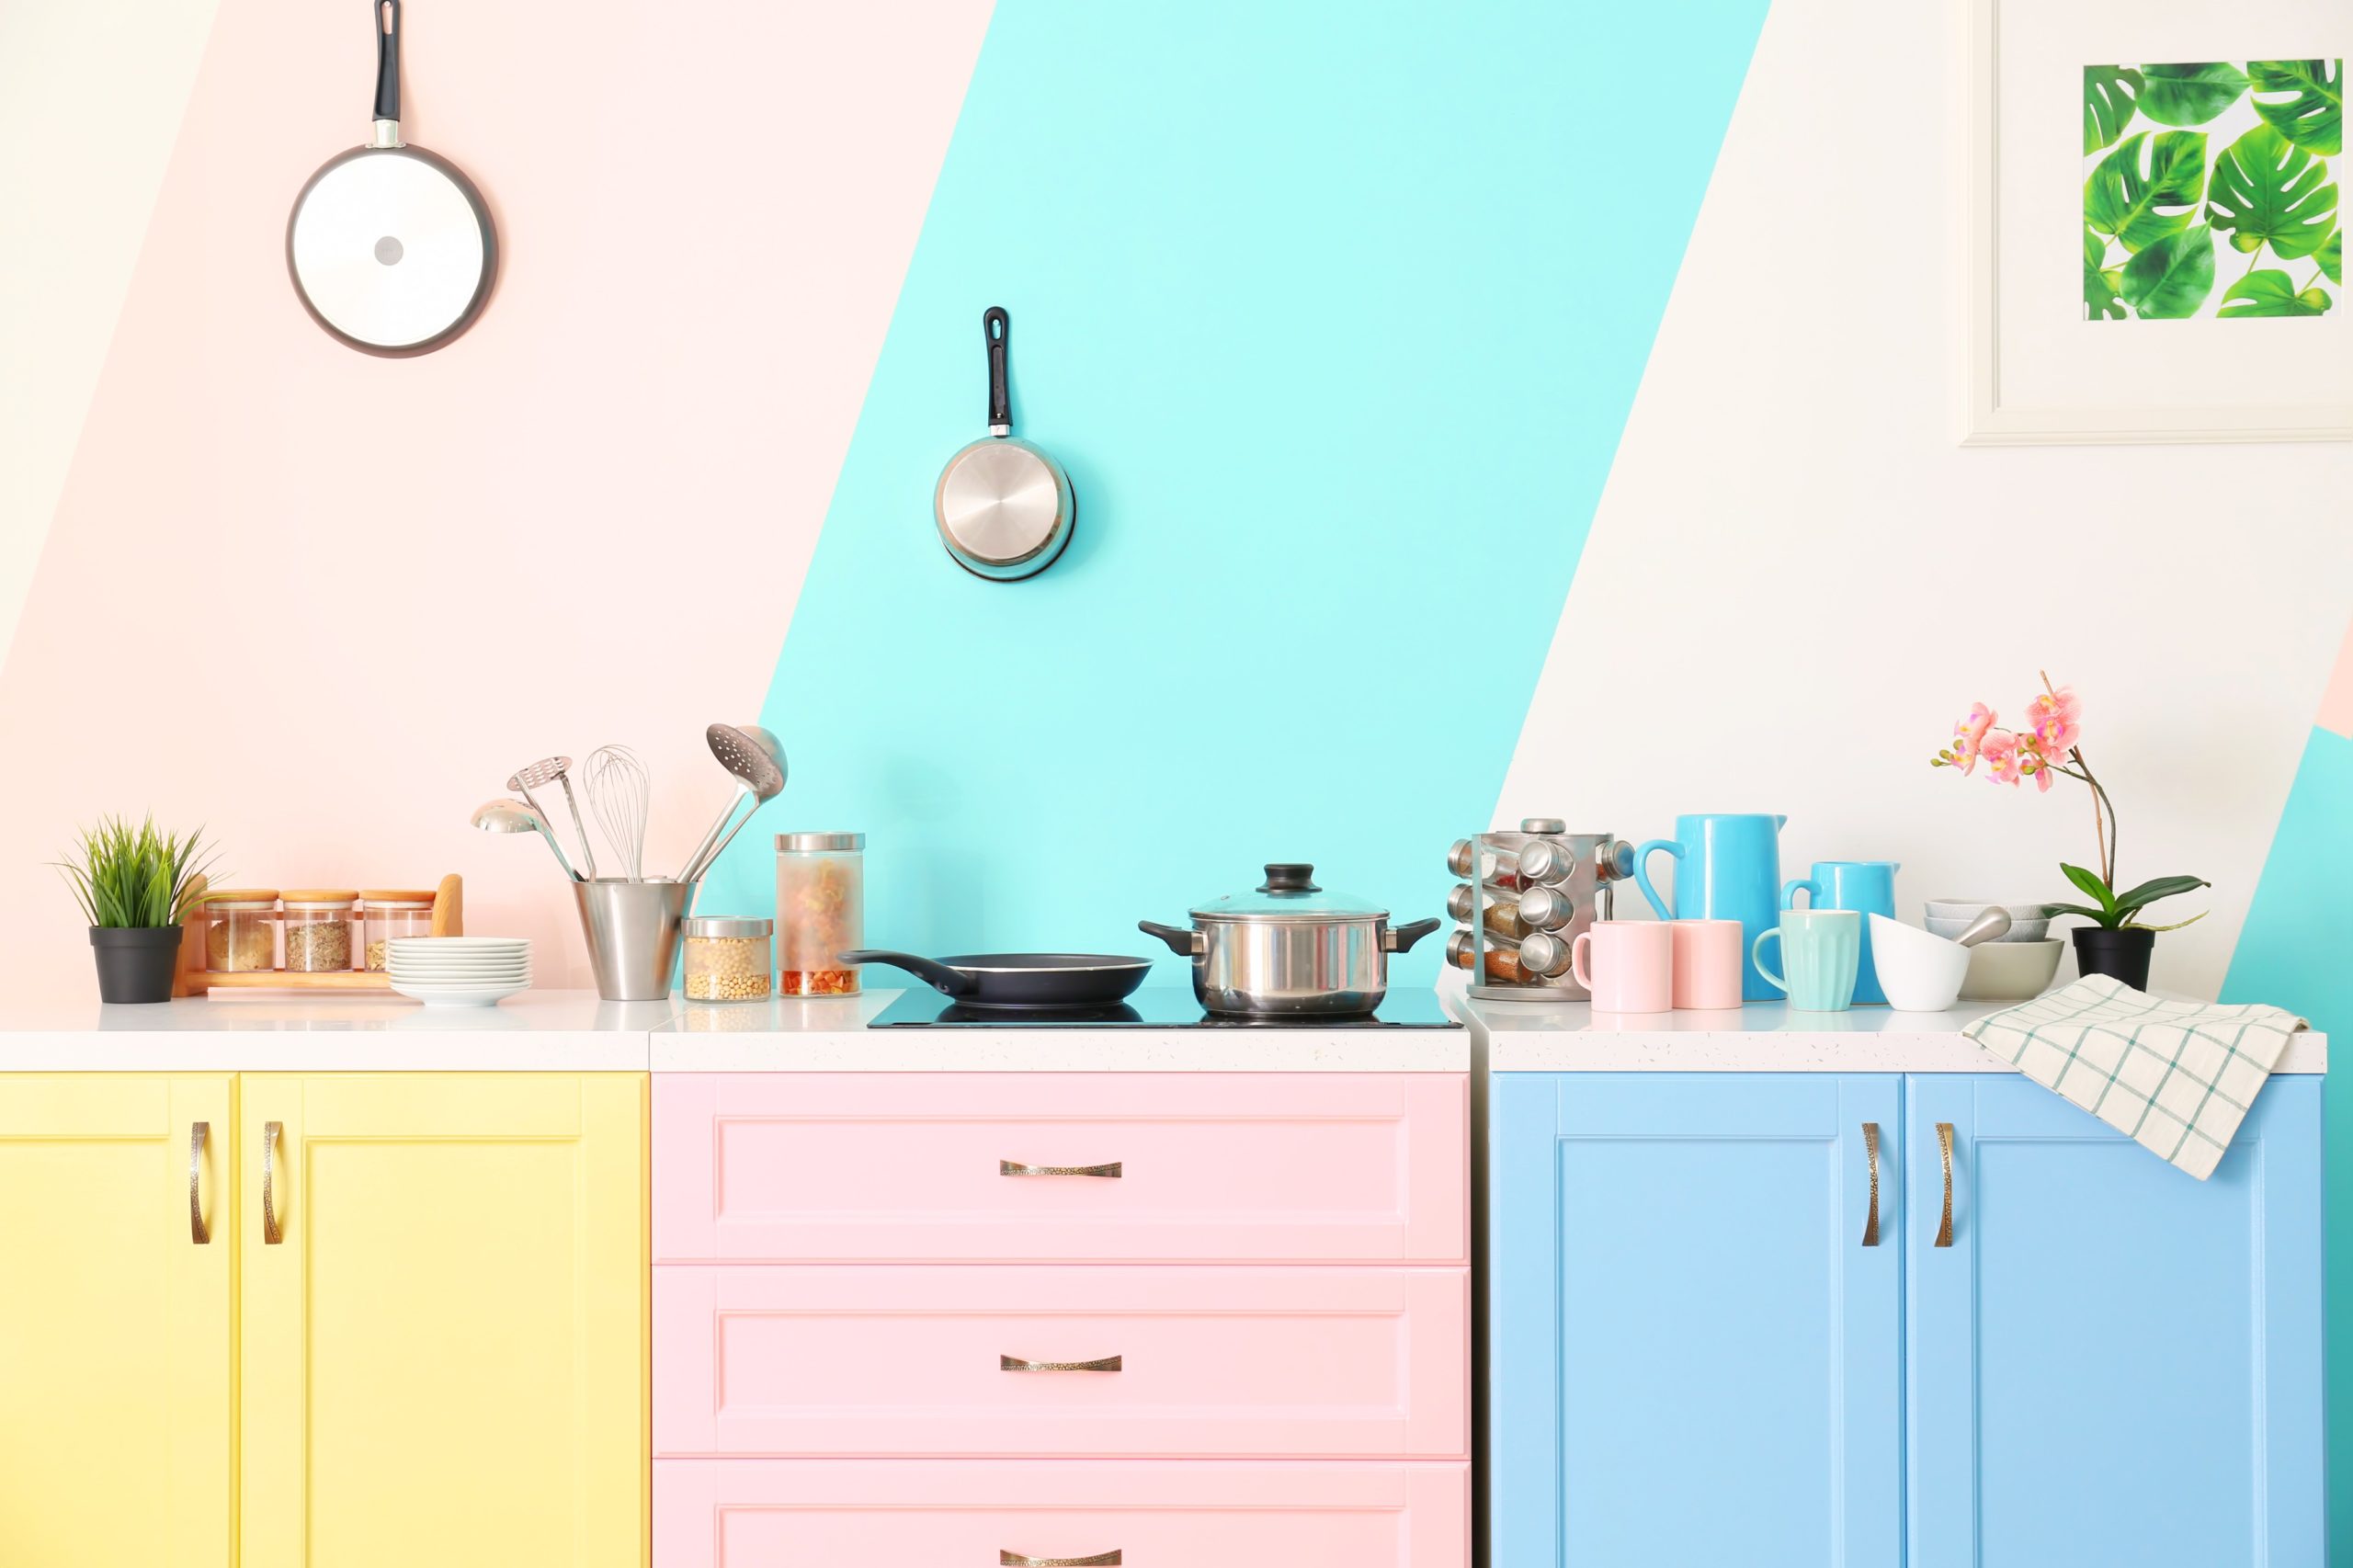 <img src="pink.jpg" alt="pink and blue pastel kitchen"/> 